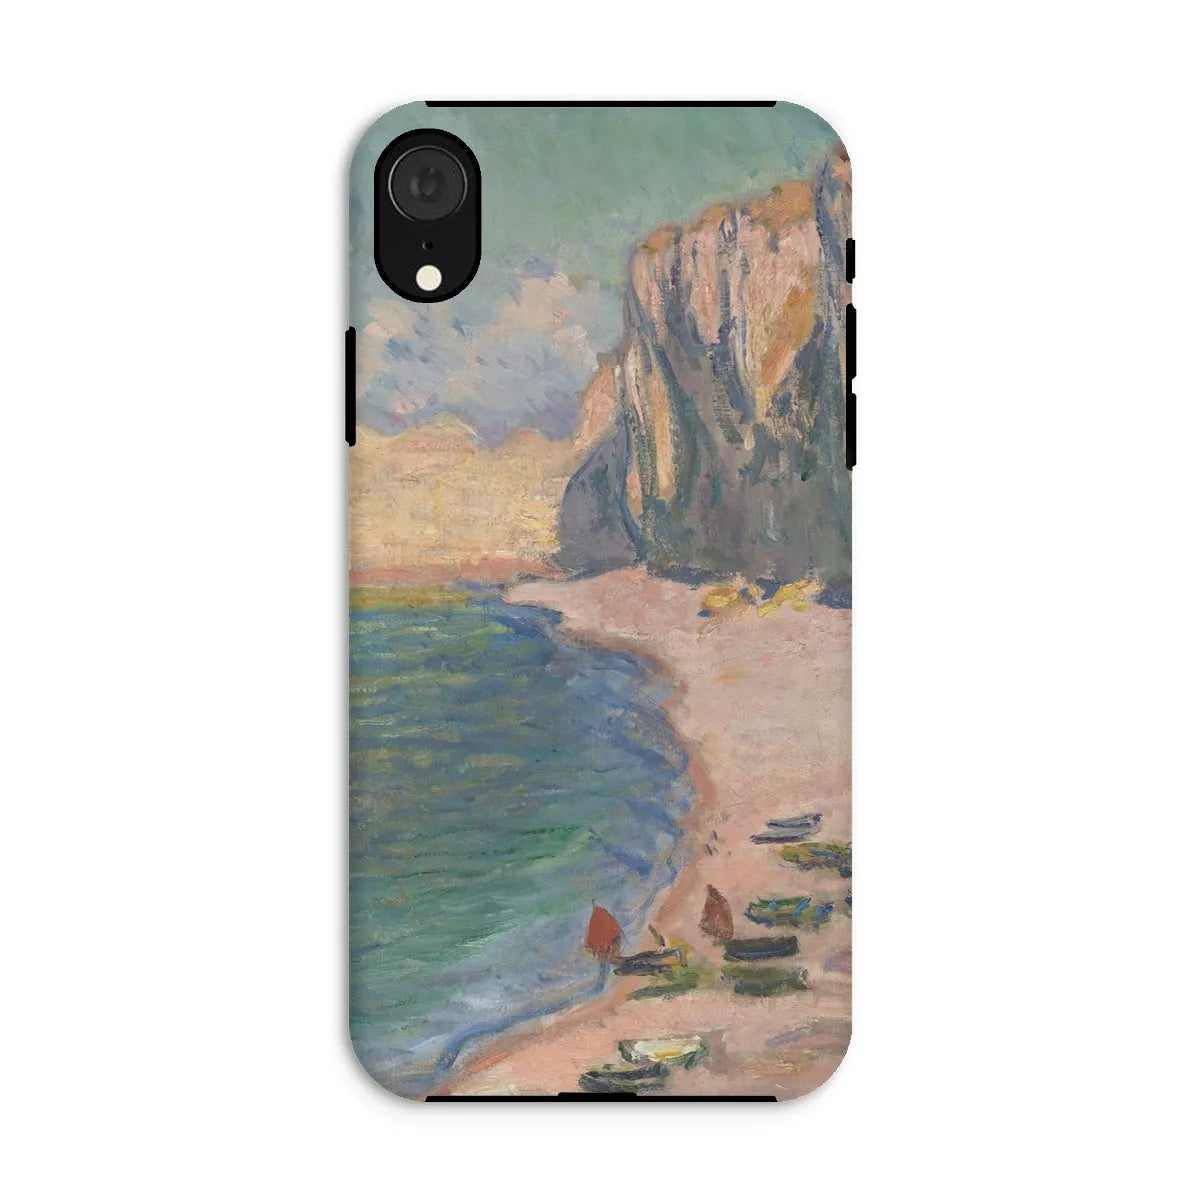 étretat - Impressionist Art Phone Case - Claude Monet - Iphone Xr / Matte - Mobile Phone Cases - Aesthetic Art